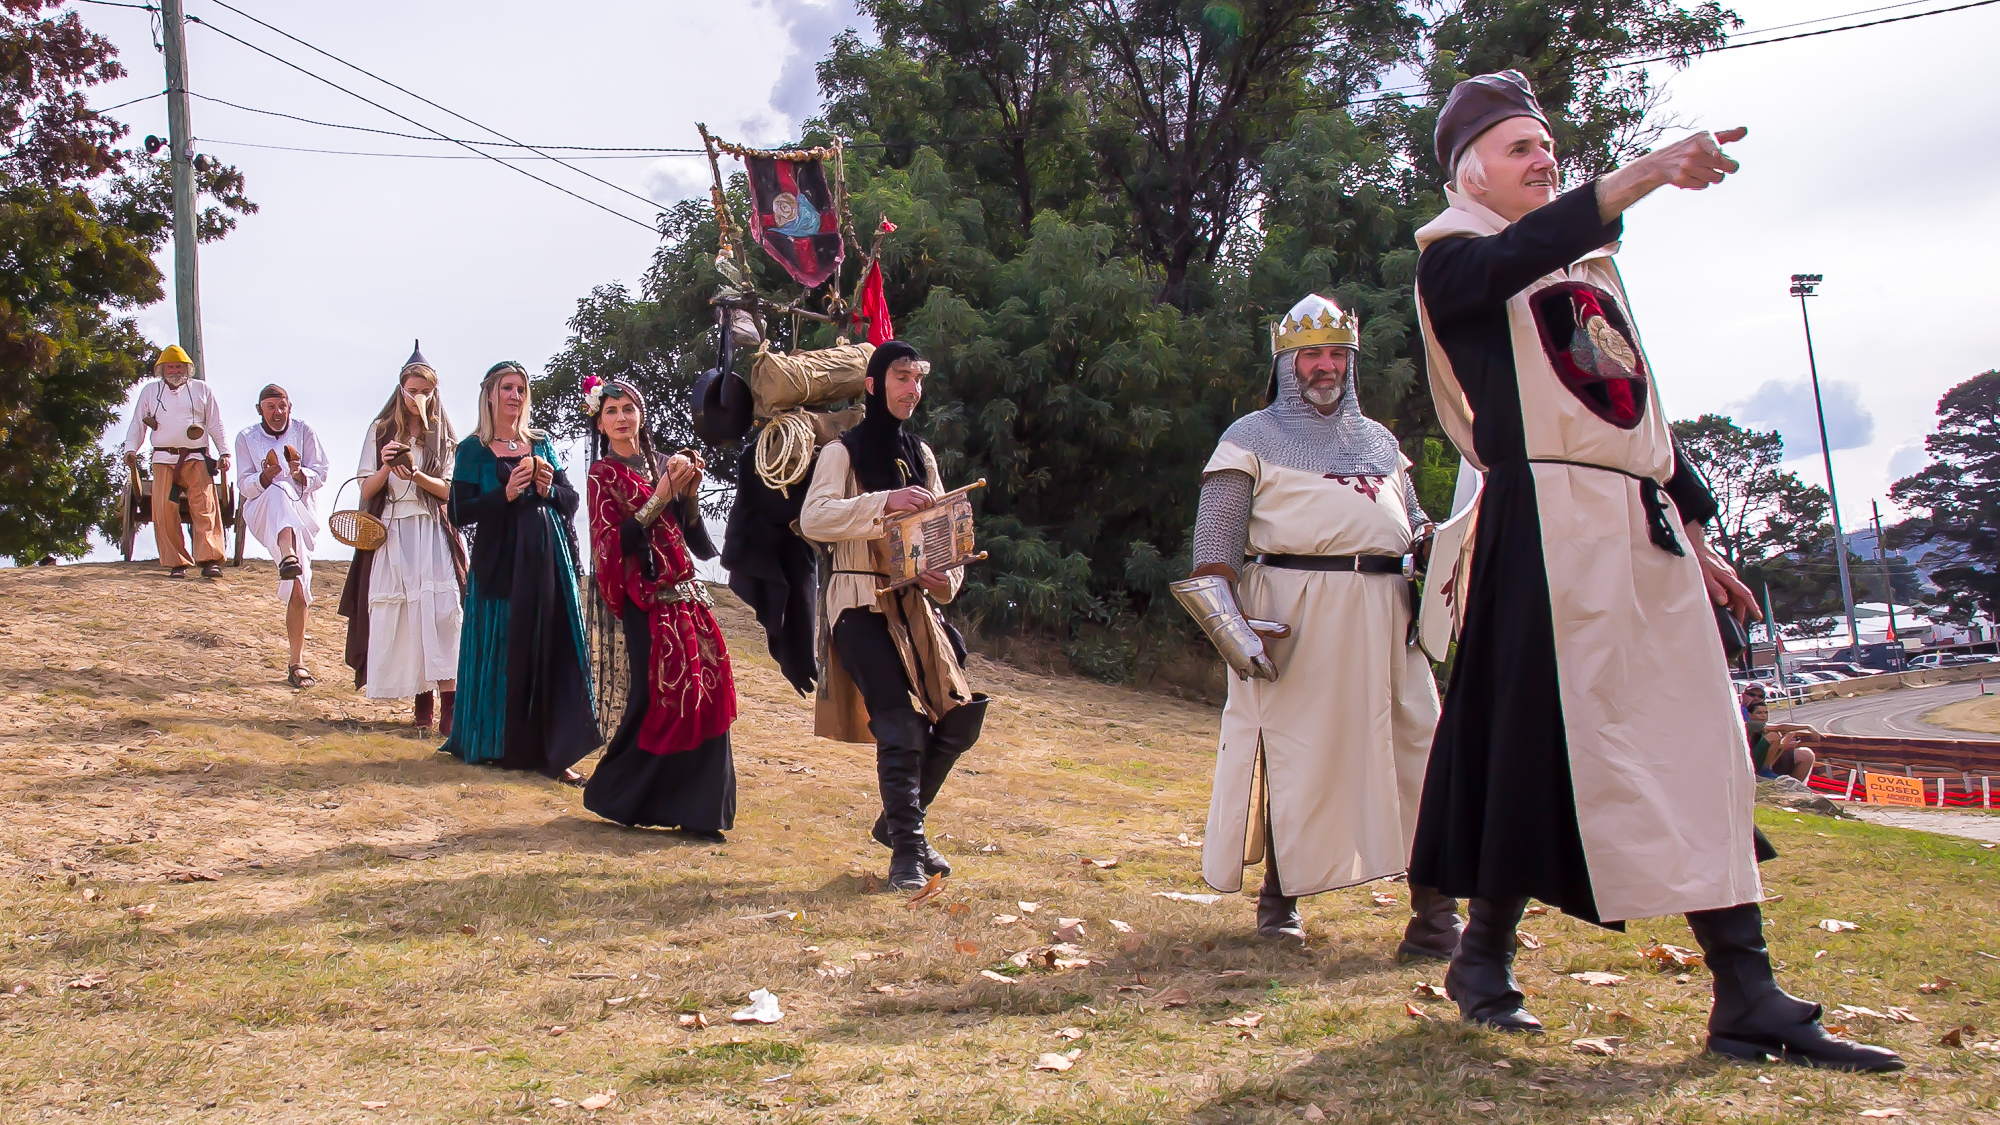 People in medieval costume walking in a line